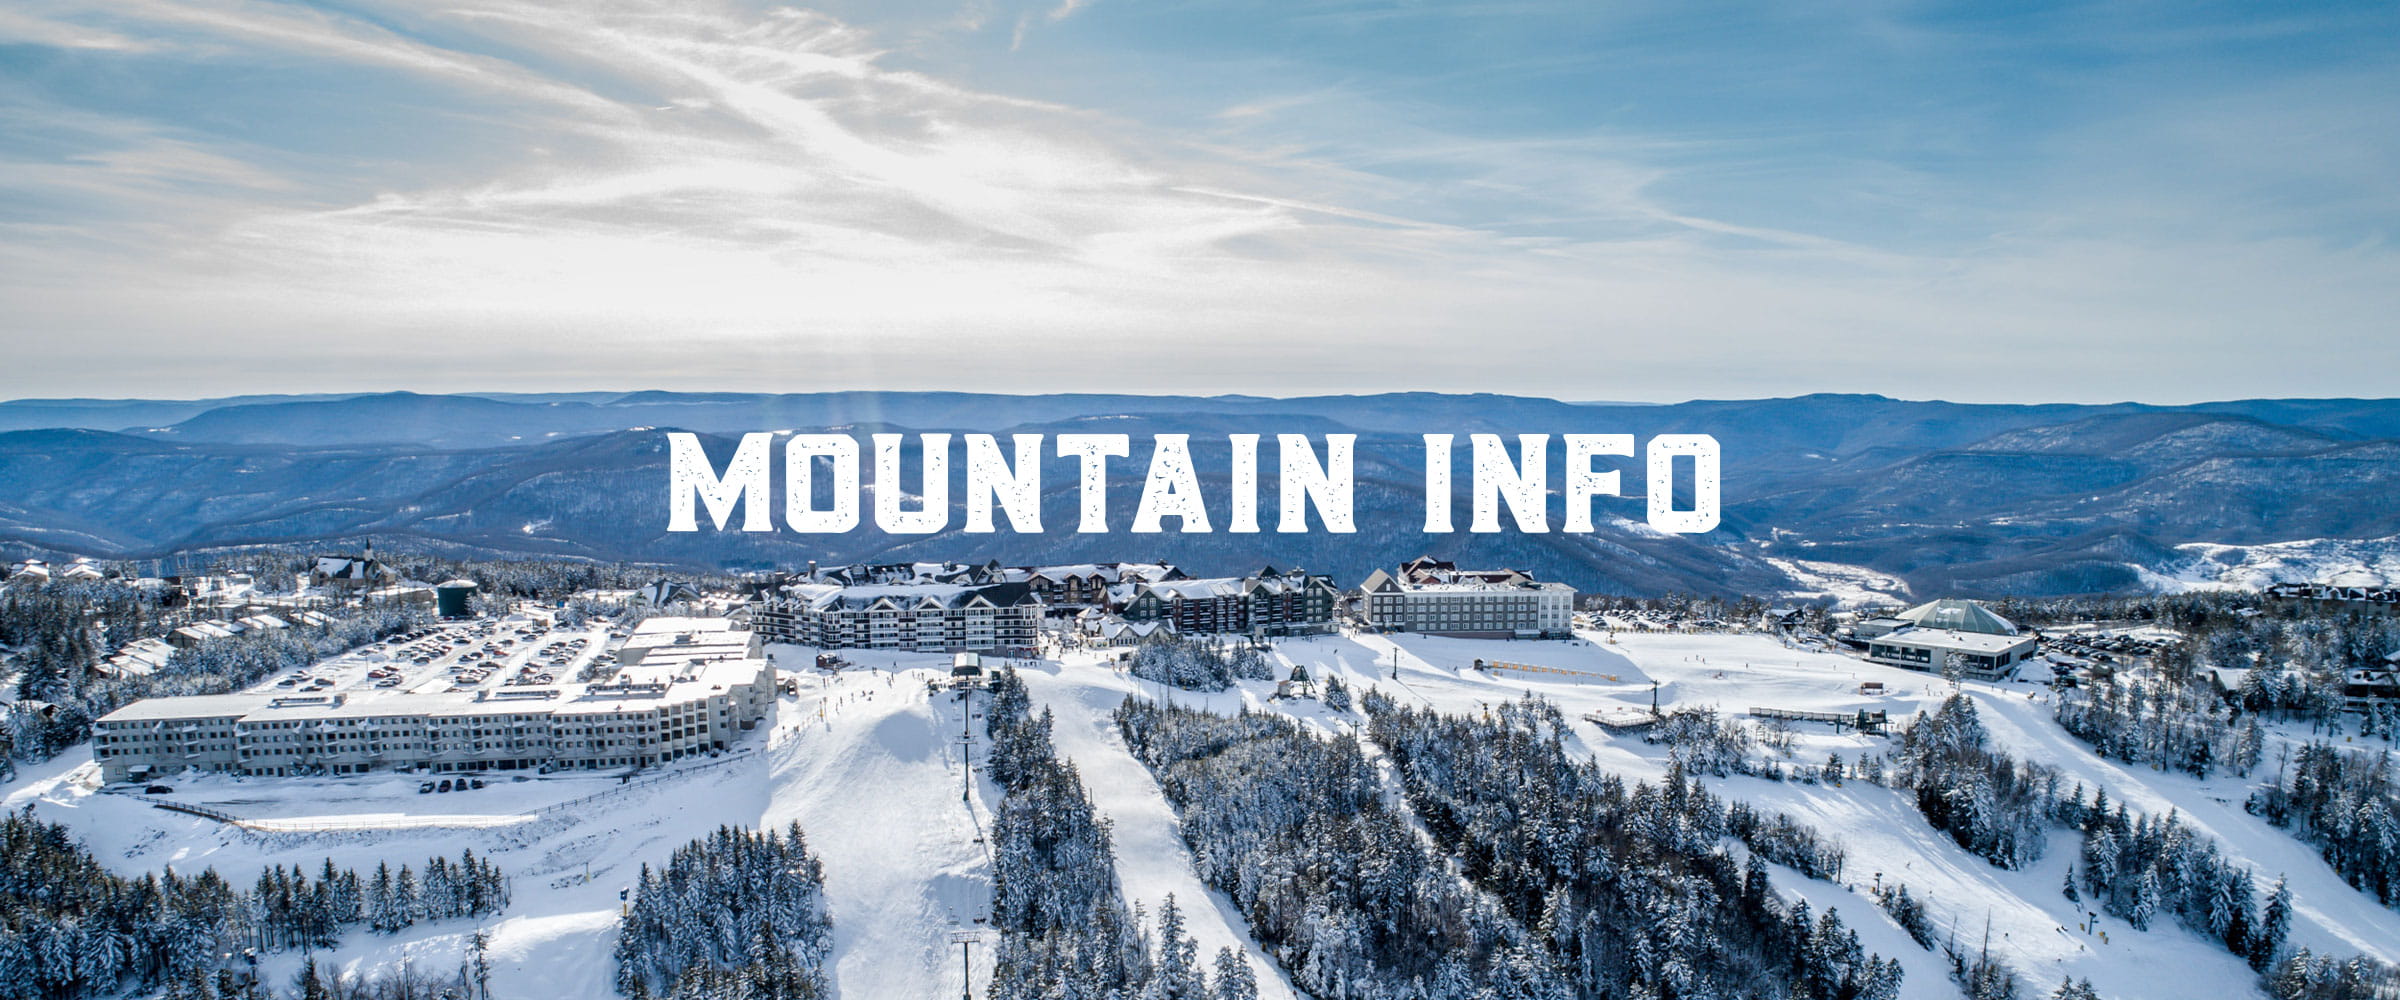 Snowshoe Mountain Info